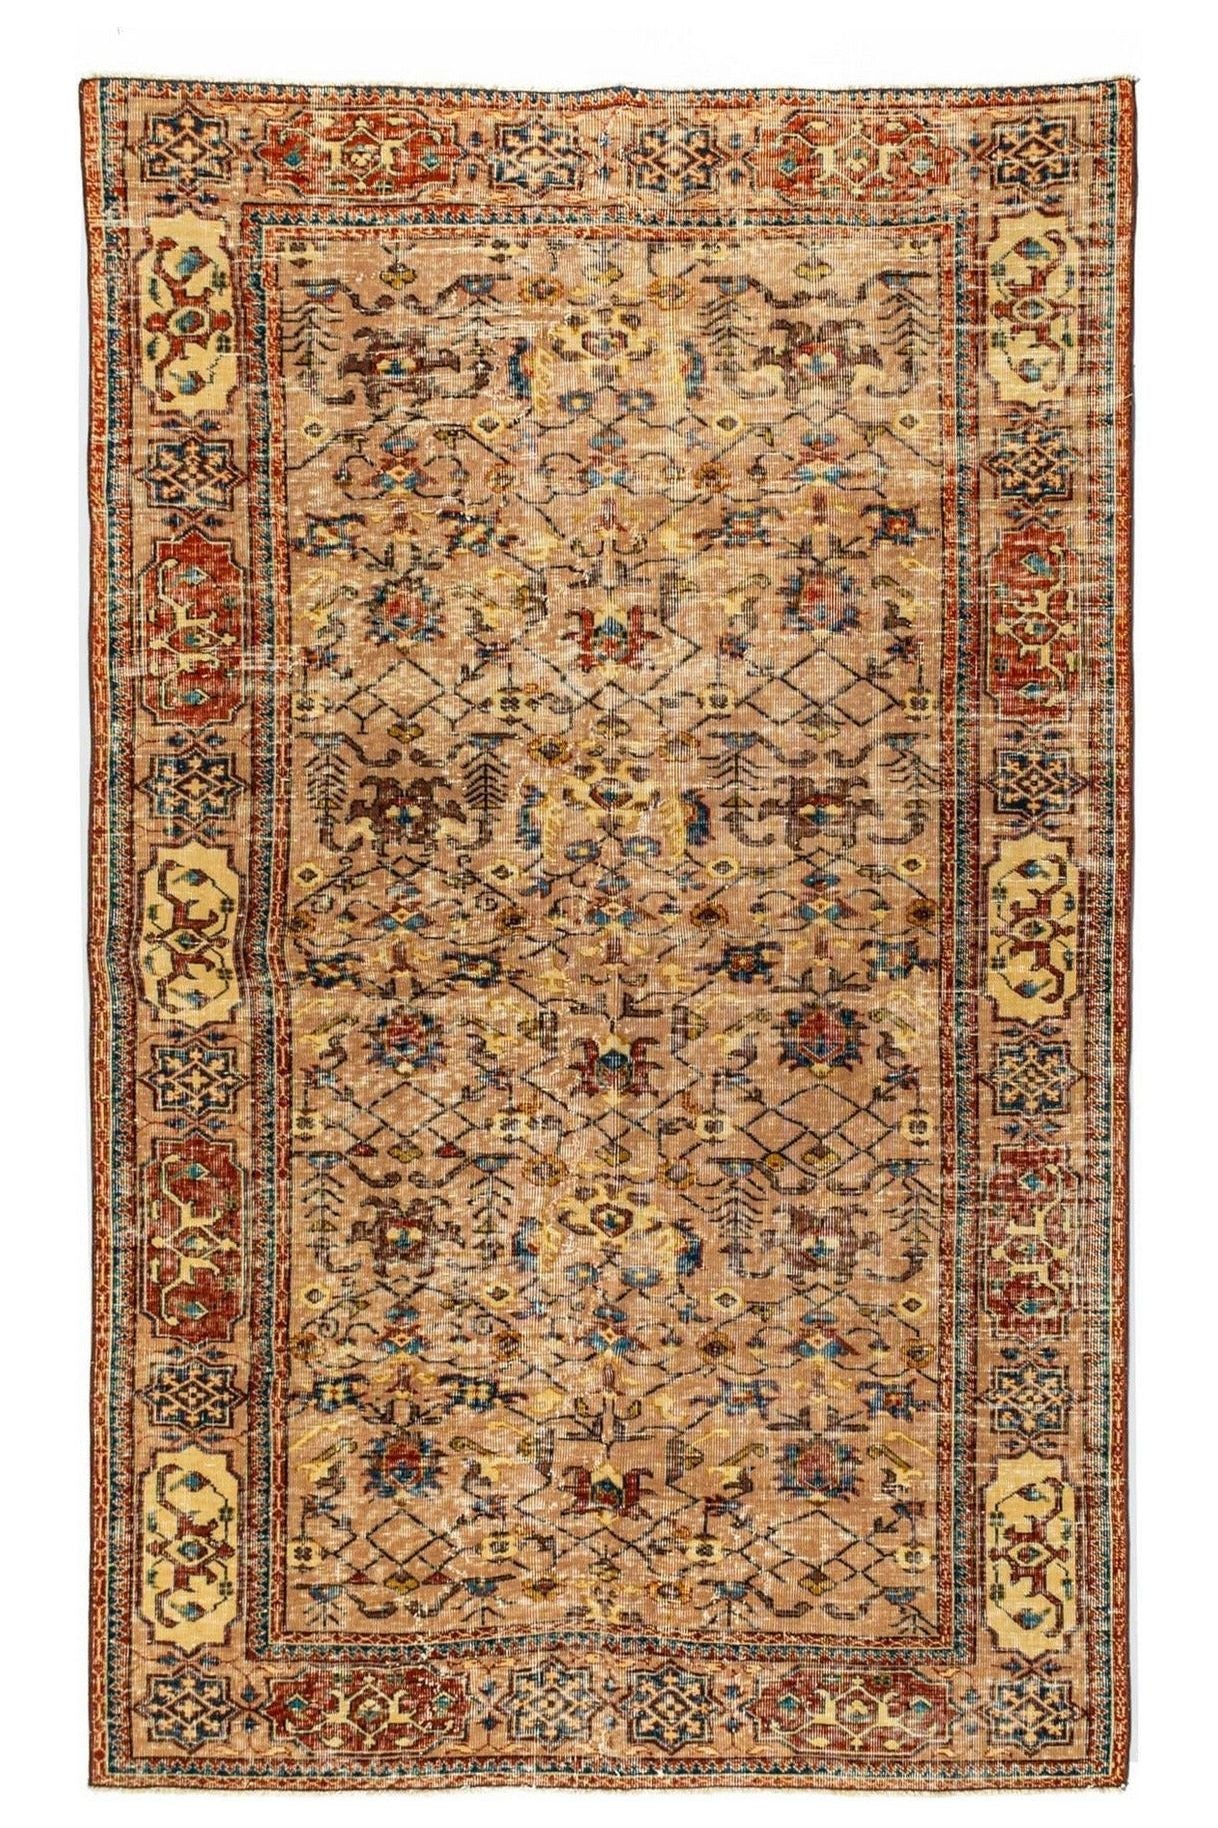 #Turkish_Carpets_Rugs# #Modern_Carpets# #Abrash_Carpets#Abrash-Bh212-252X156